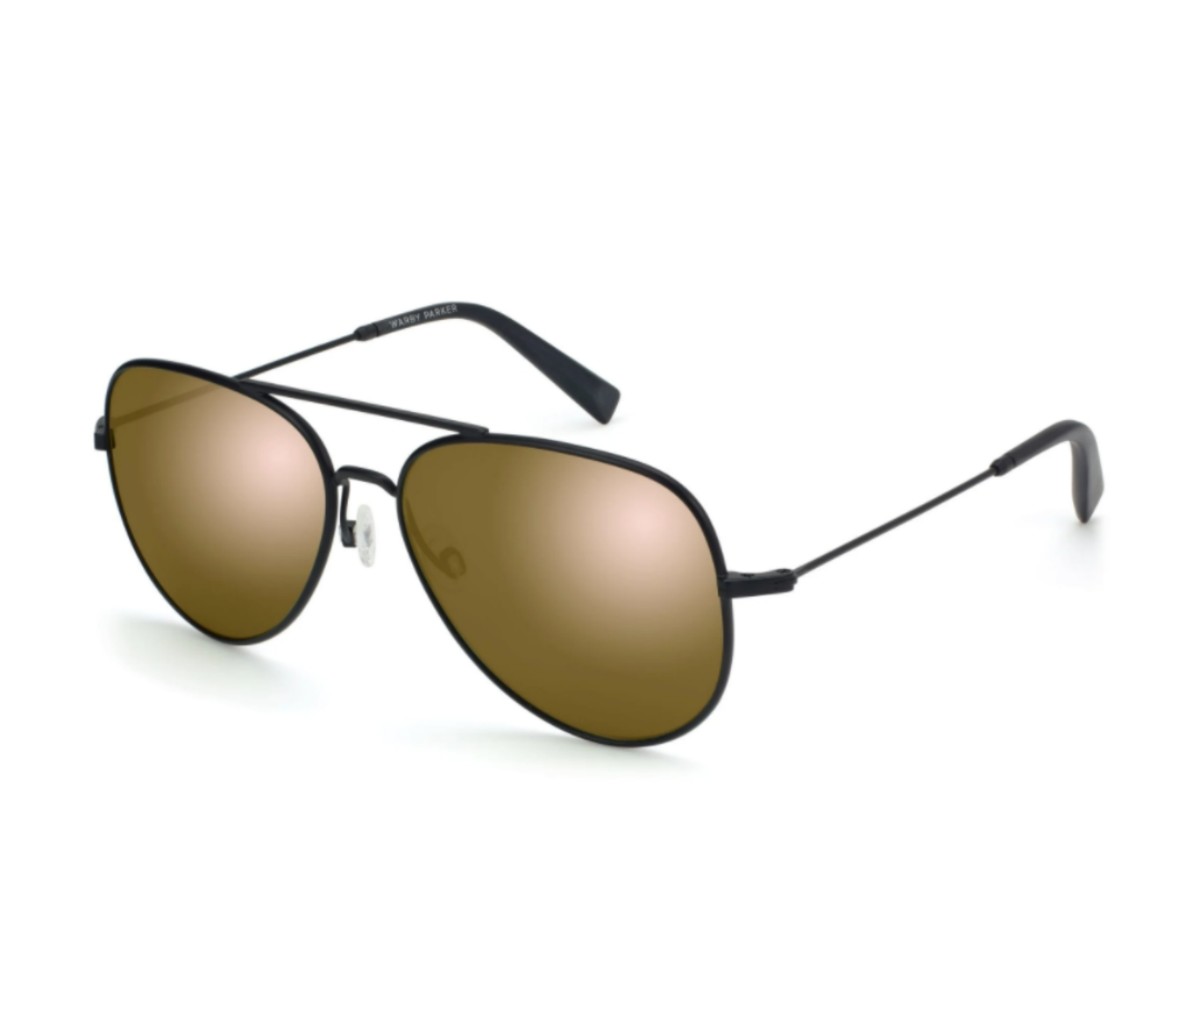 Warby Parker Raider aviator sunglasses